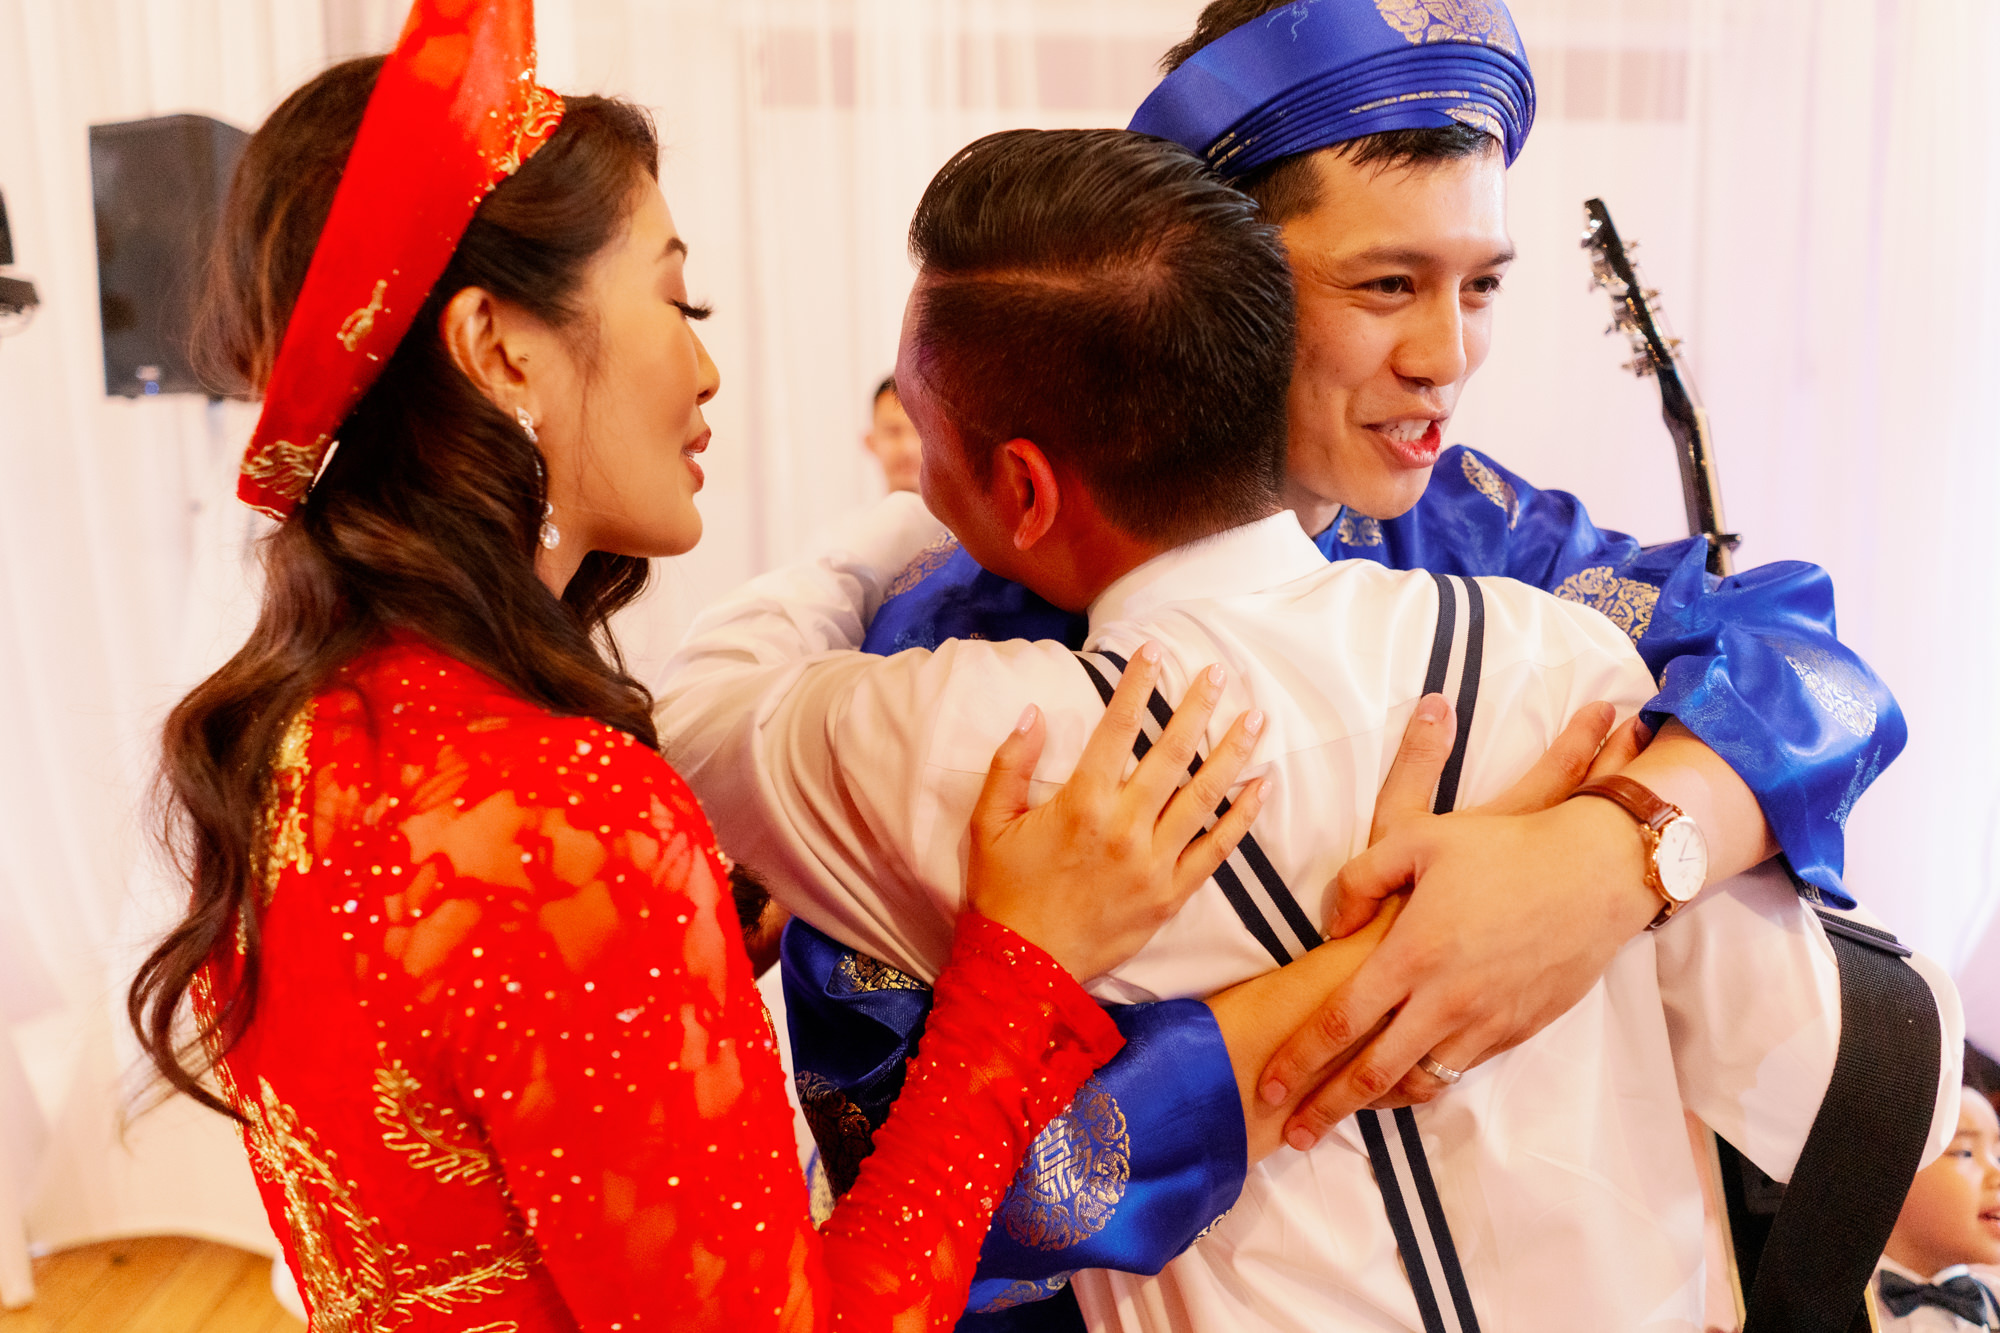 Seattle Vietnamese wedding photographer: Lynda and John